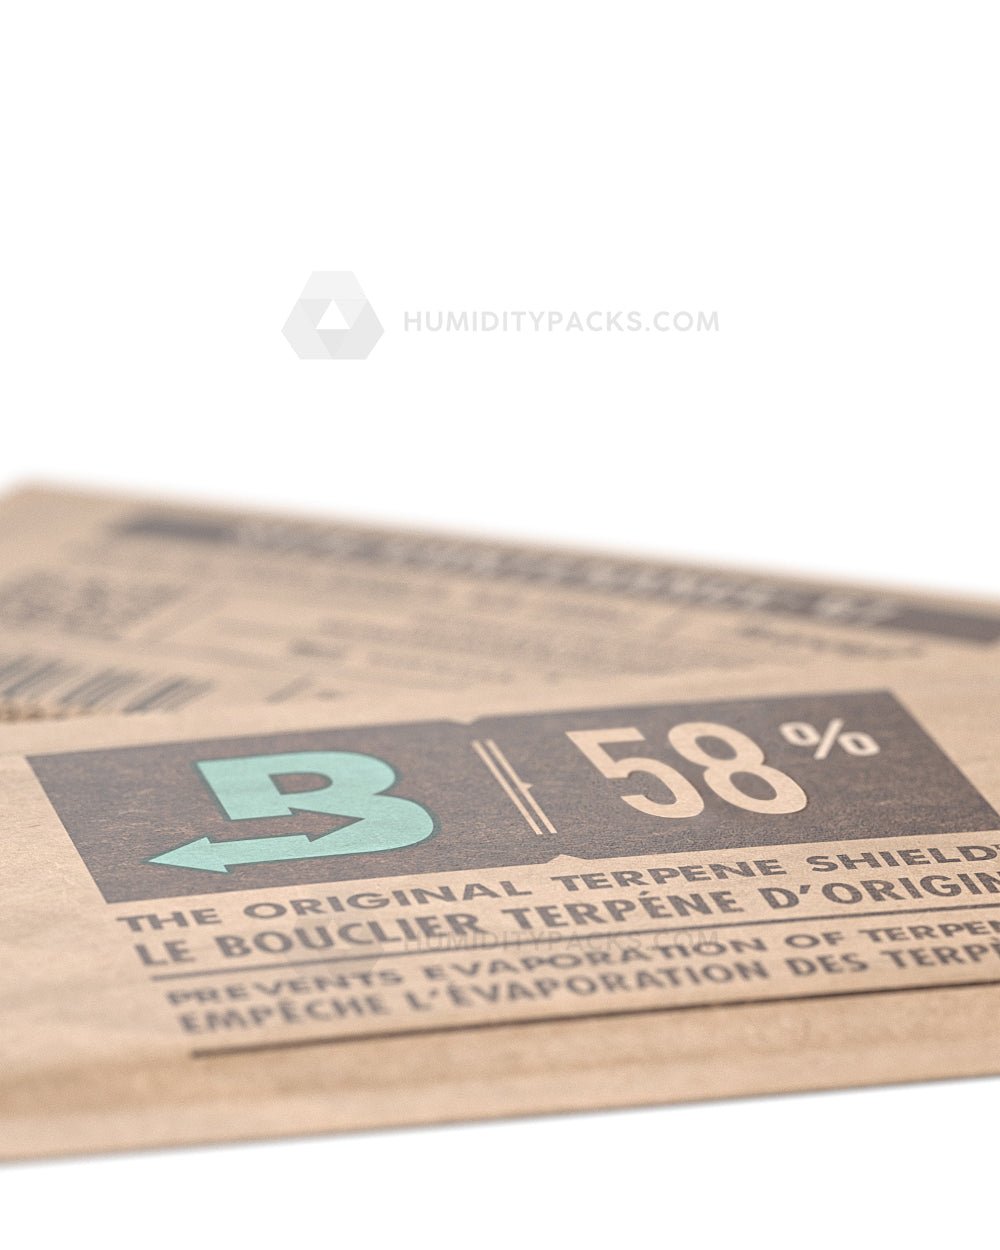 Boveda Humidity Packs 58% (67 Gram) 100-Box Humidity Packs - 4